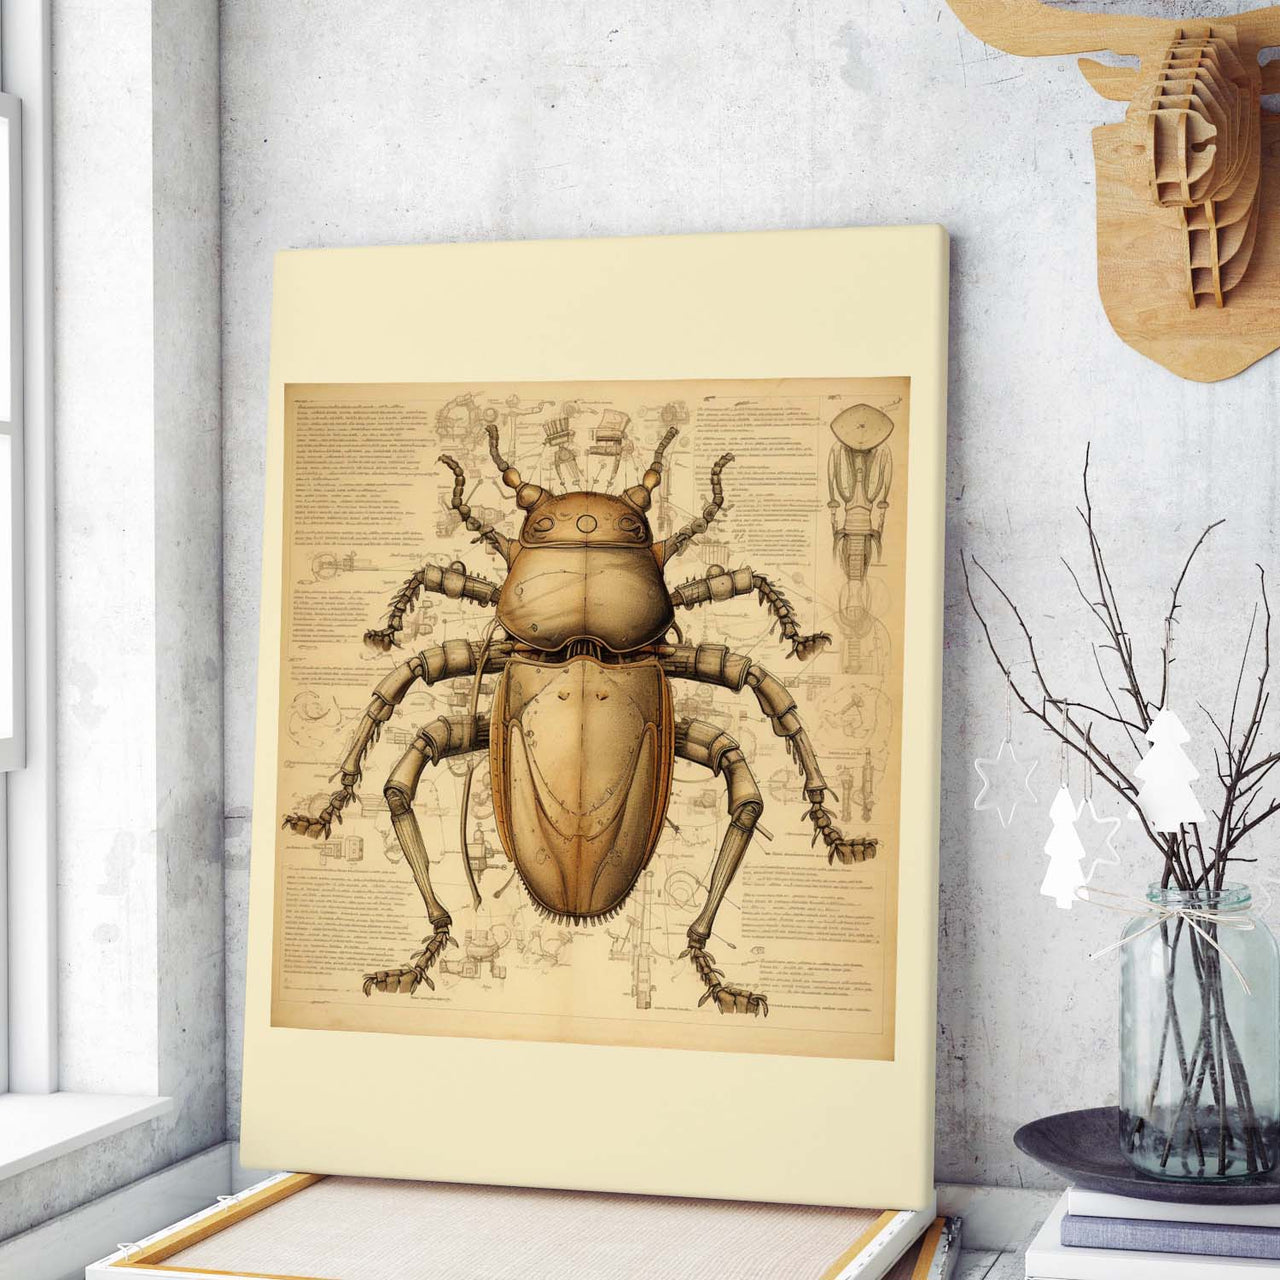 Drawings Beetle 02 Da Vinci Style Vintage Framed Canvas Prints Wall Art Hanging Home Decor